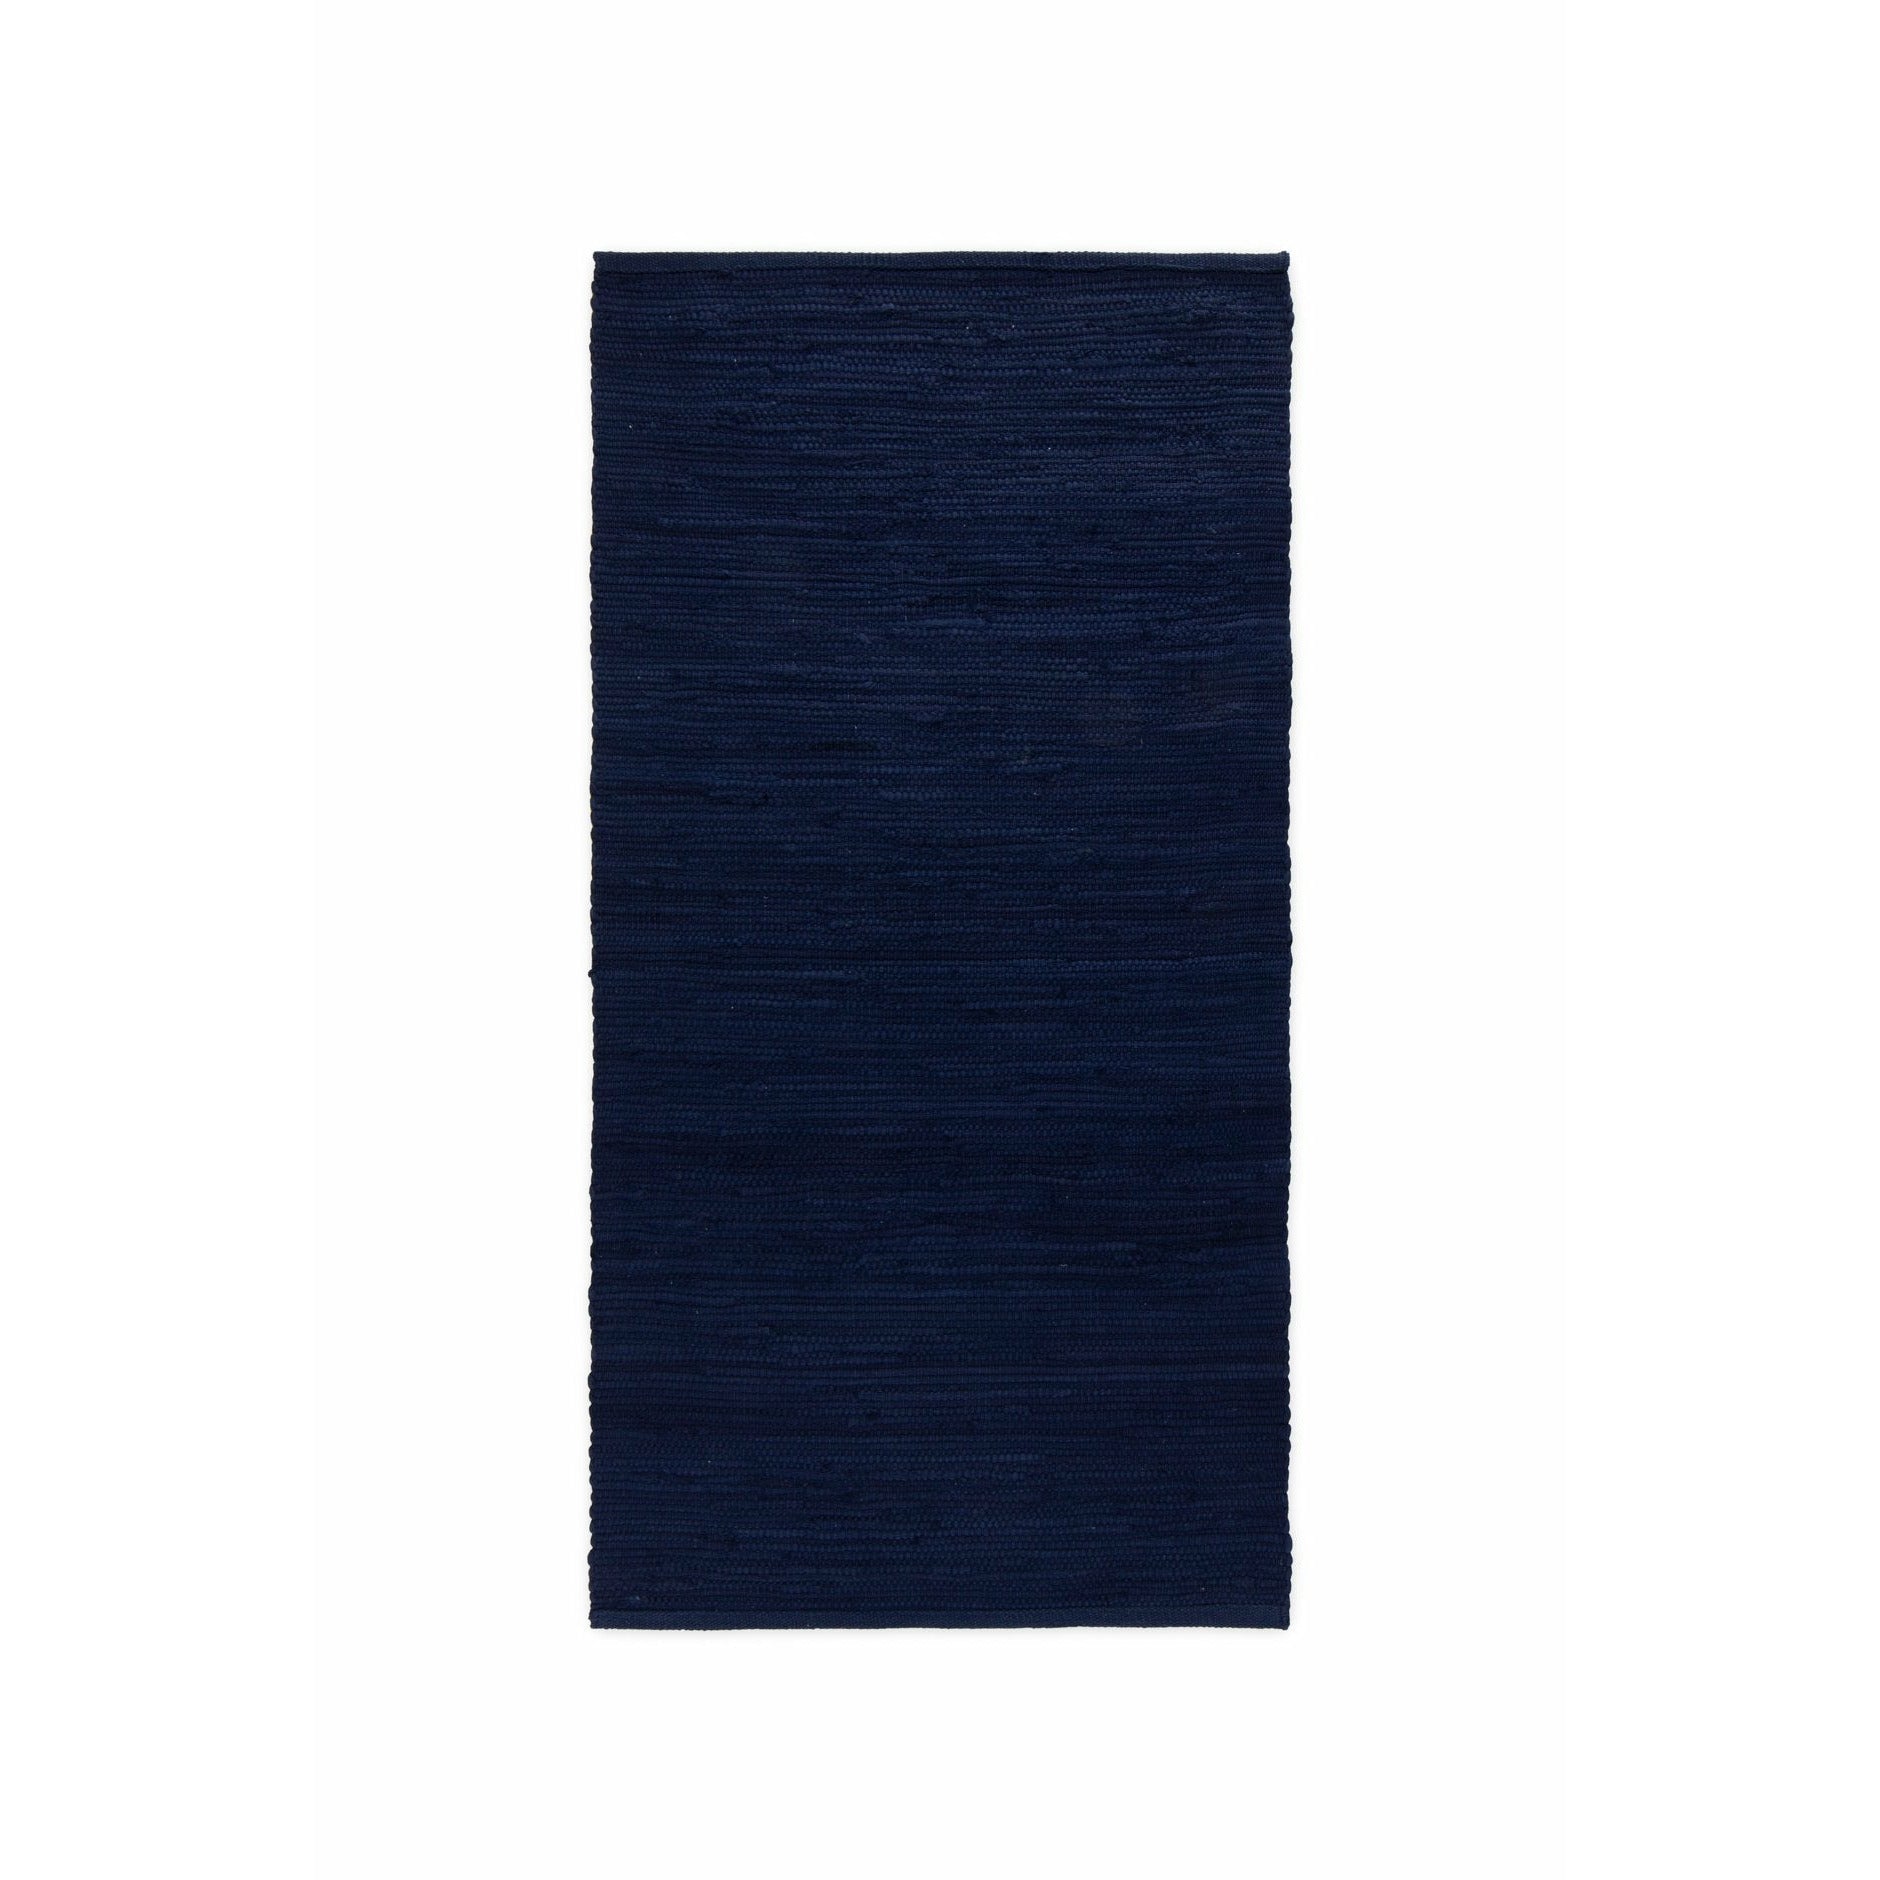 Rug Solid Coton tapis profond océan bleu, 140 x 200 cm